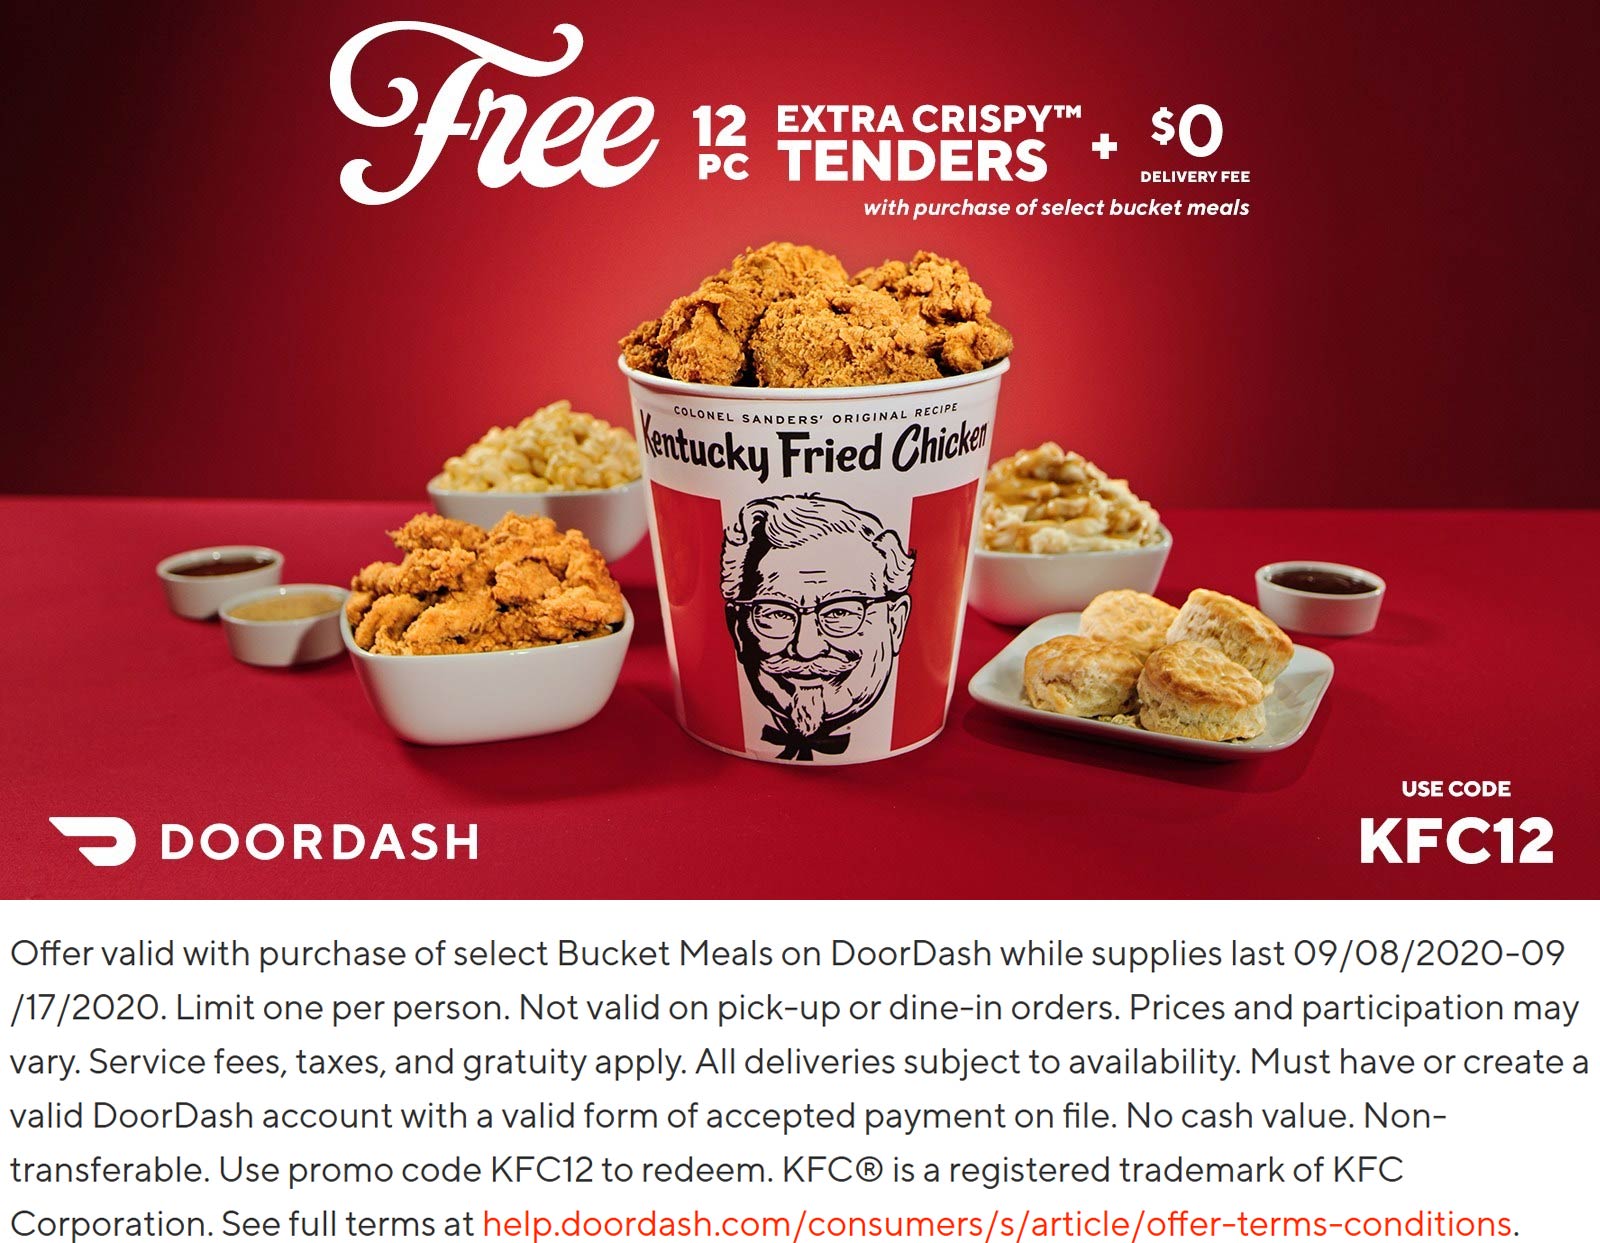 KFC restaurants Coupon  Free 12pc crispy chicken tenders with your bucket meal at KFC via free delivery promo code KFC12 #kfc 